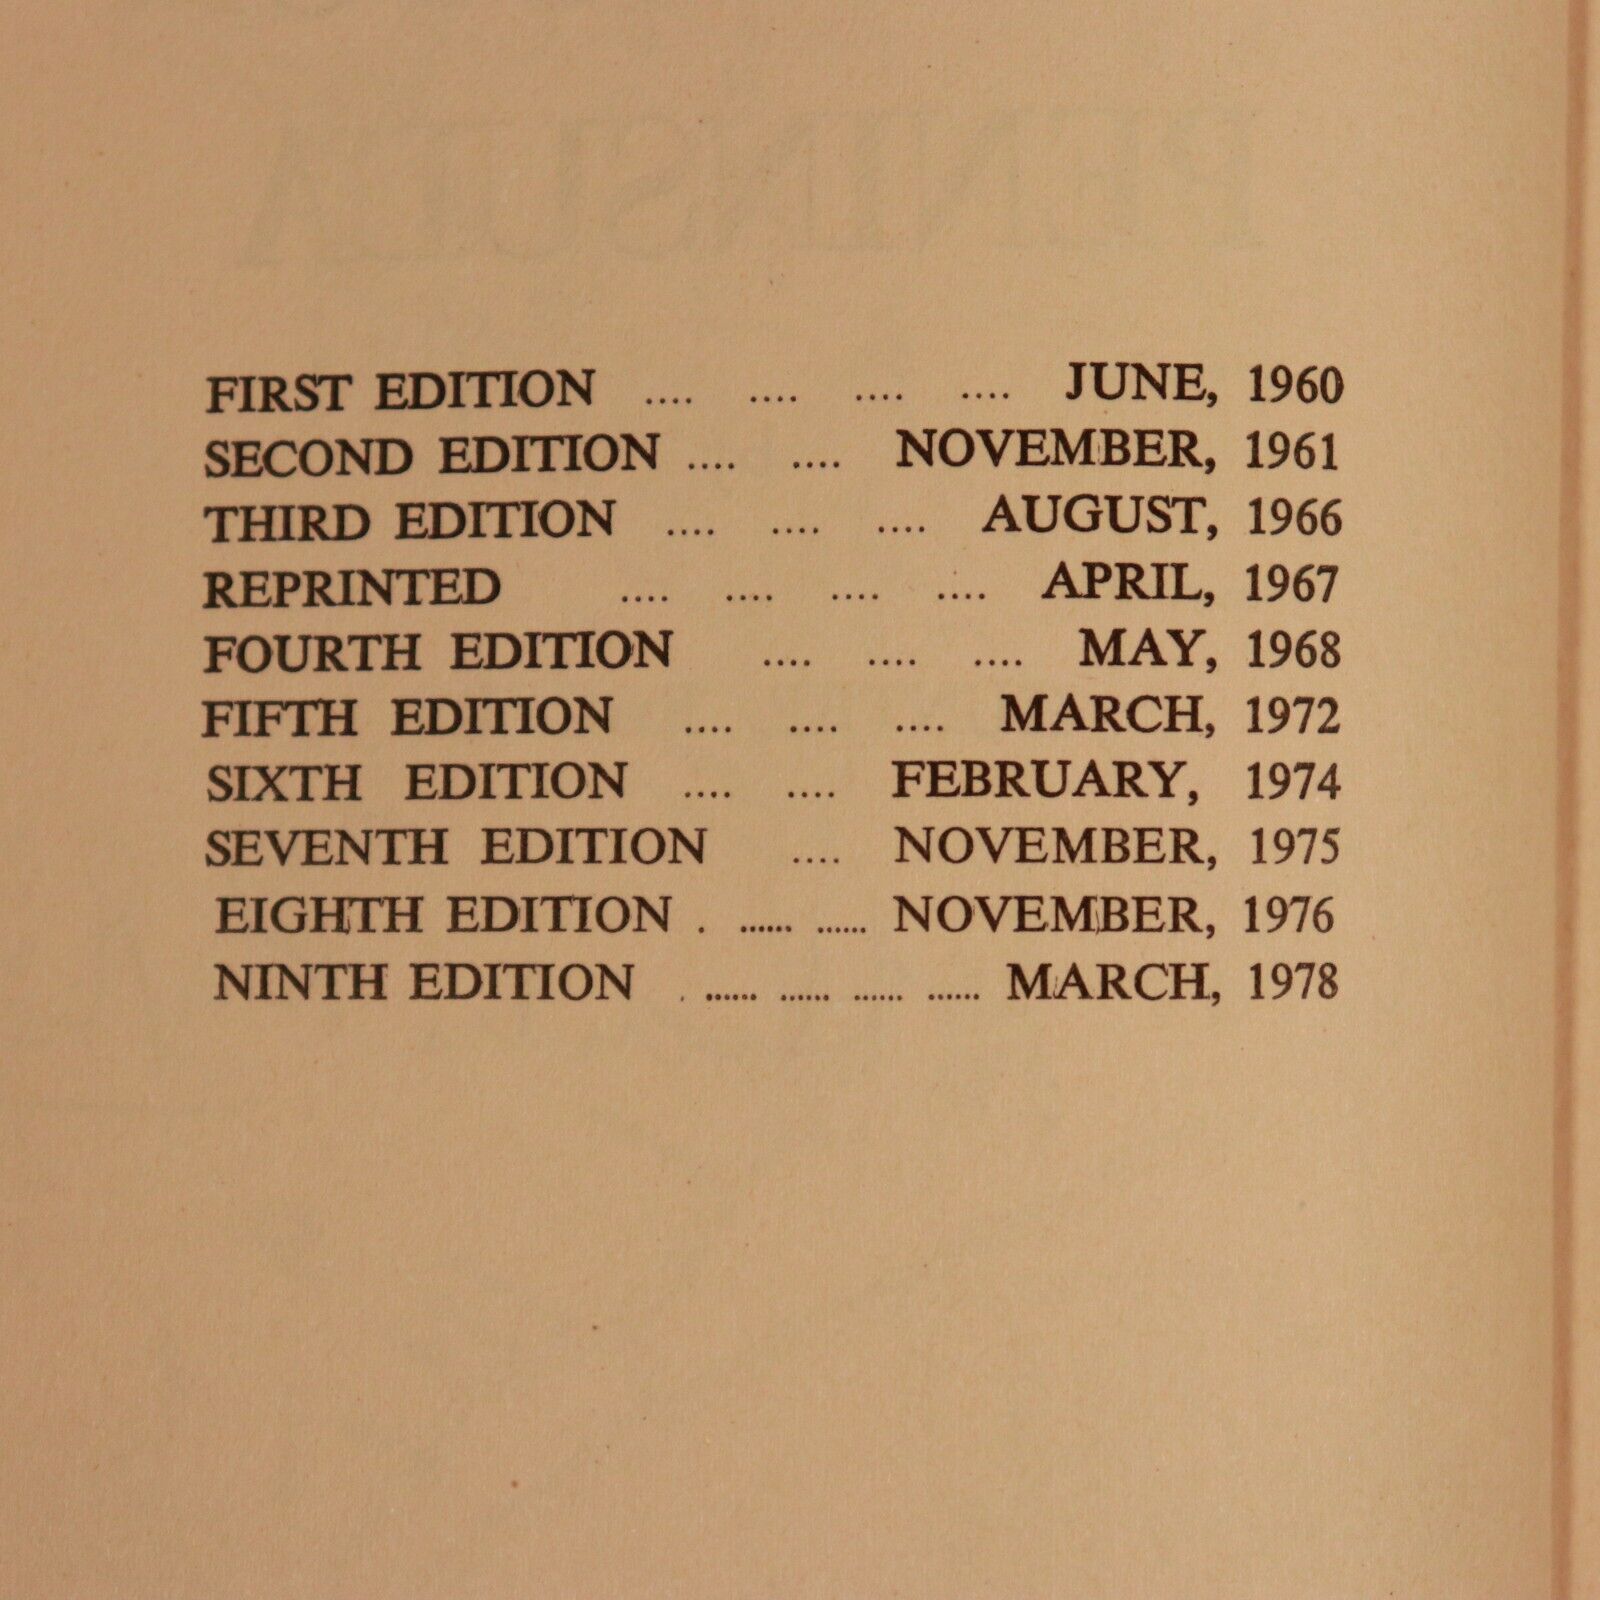 1978 Early History Of The Mornington Pensinsula Australian Local History Book